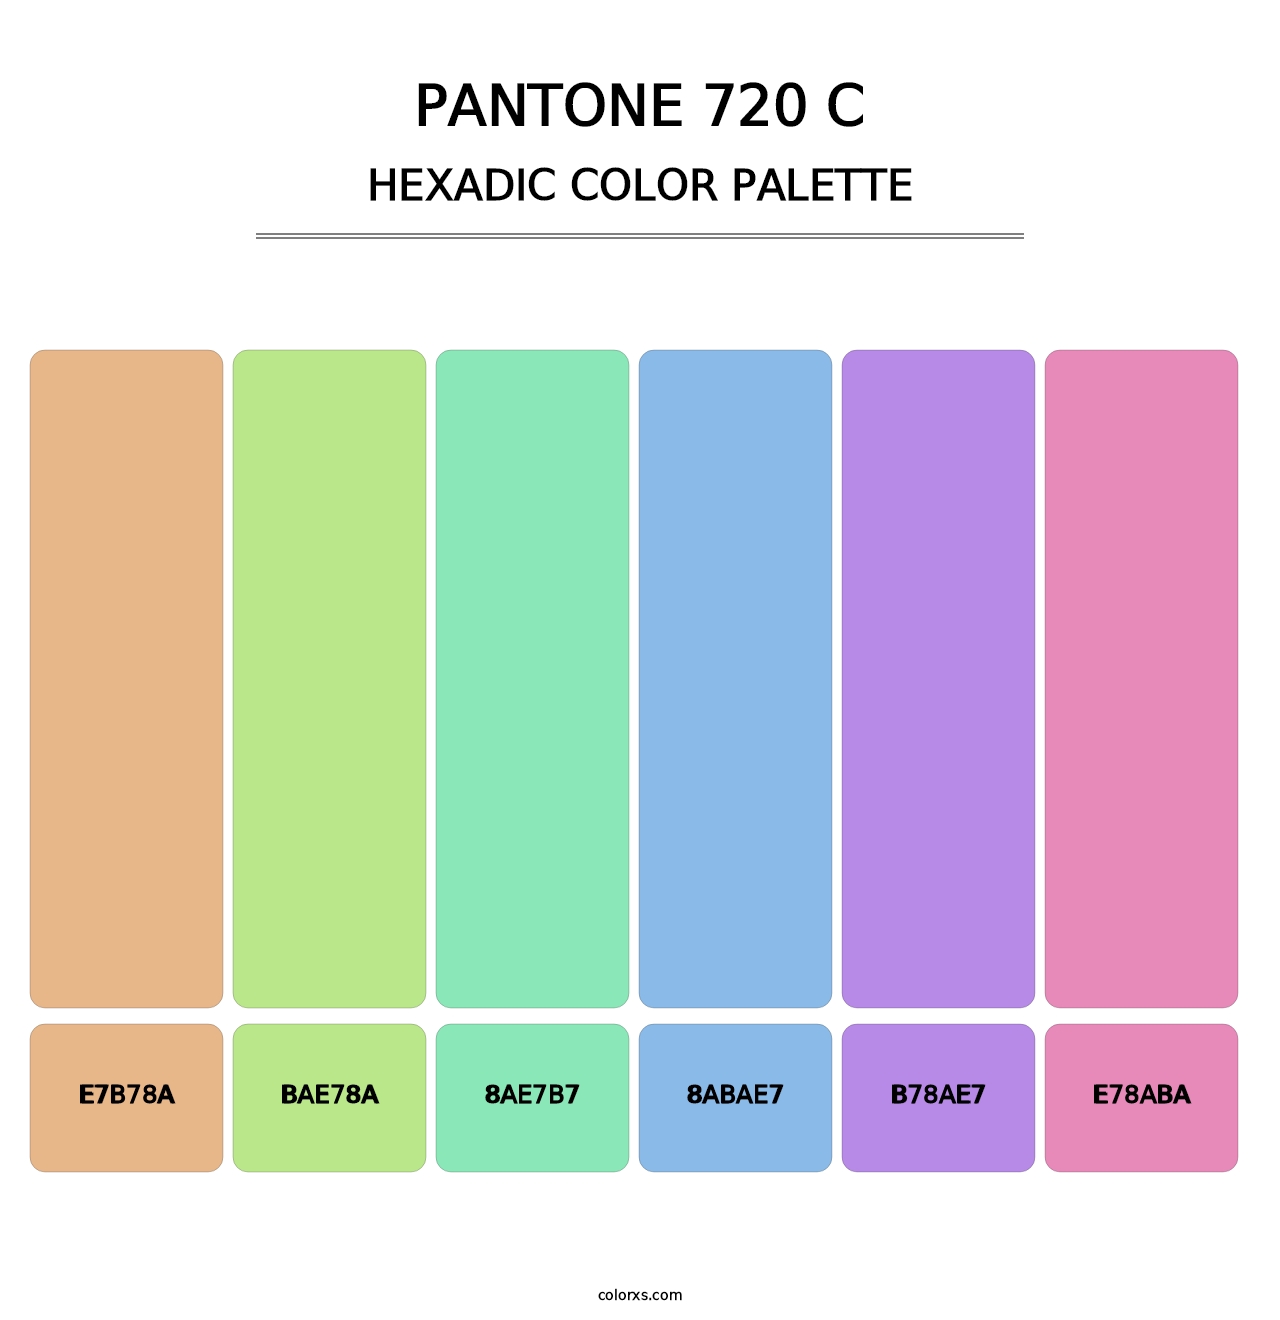 PANTONE 720 C - Hexadic Color Palette